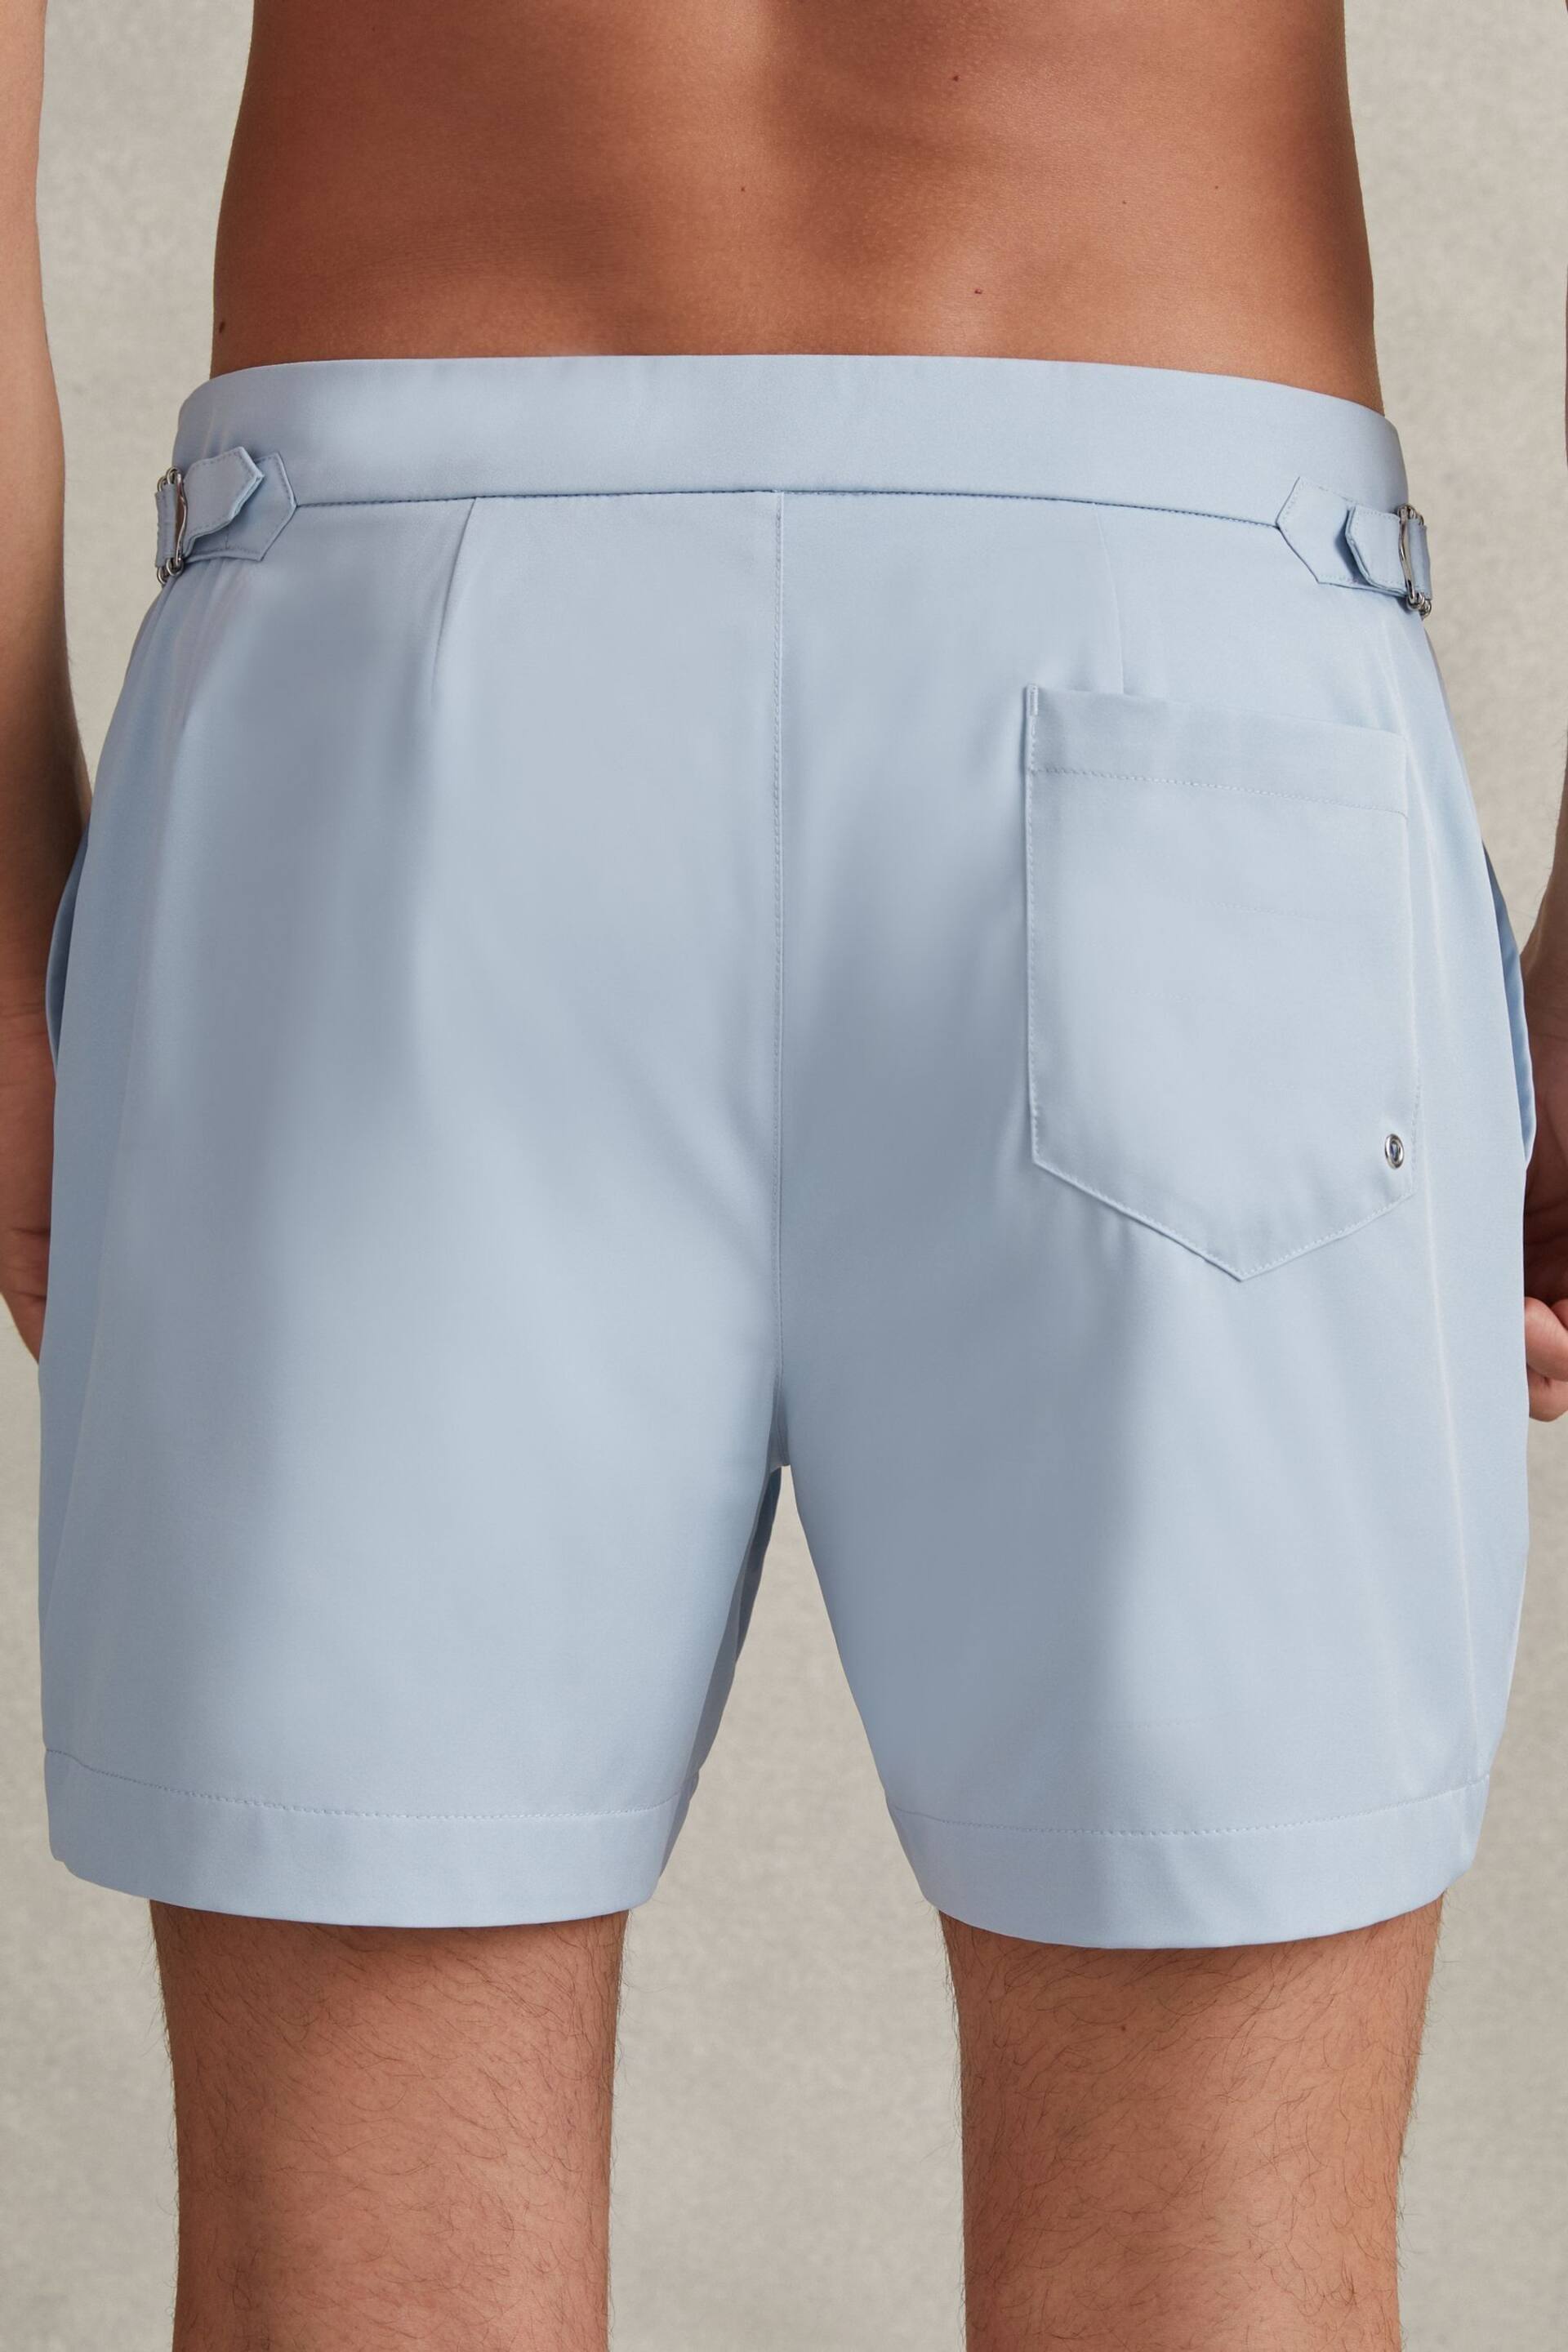 Reiss Soft Blue Sun Side Adjuster Swim Shorts - Image 5 of 6